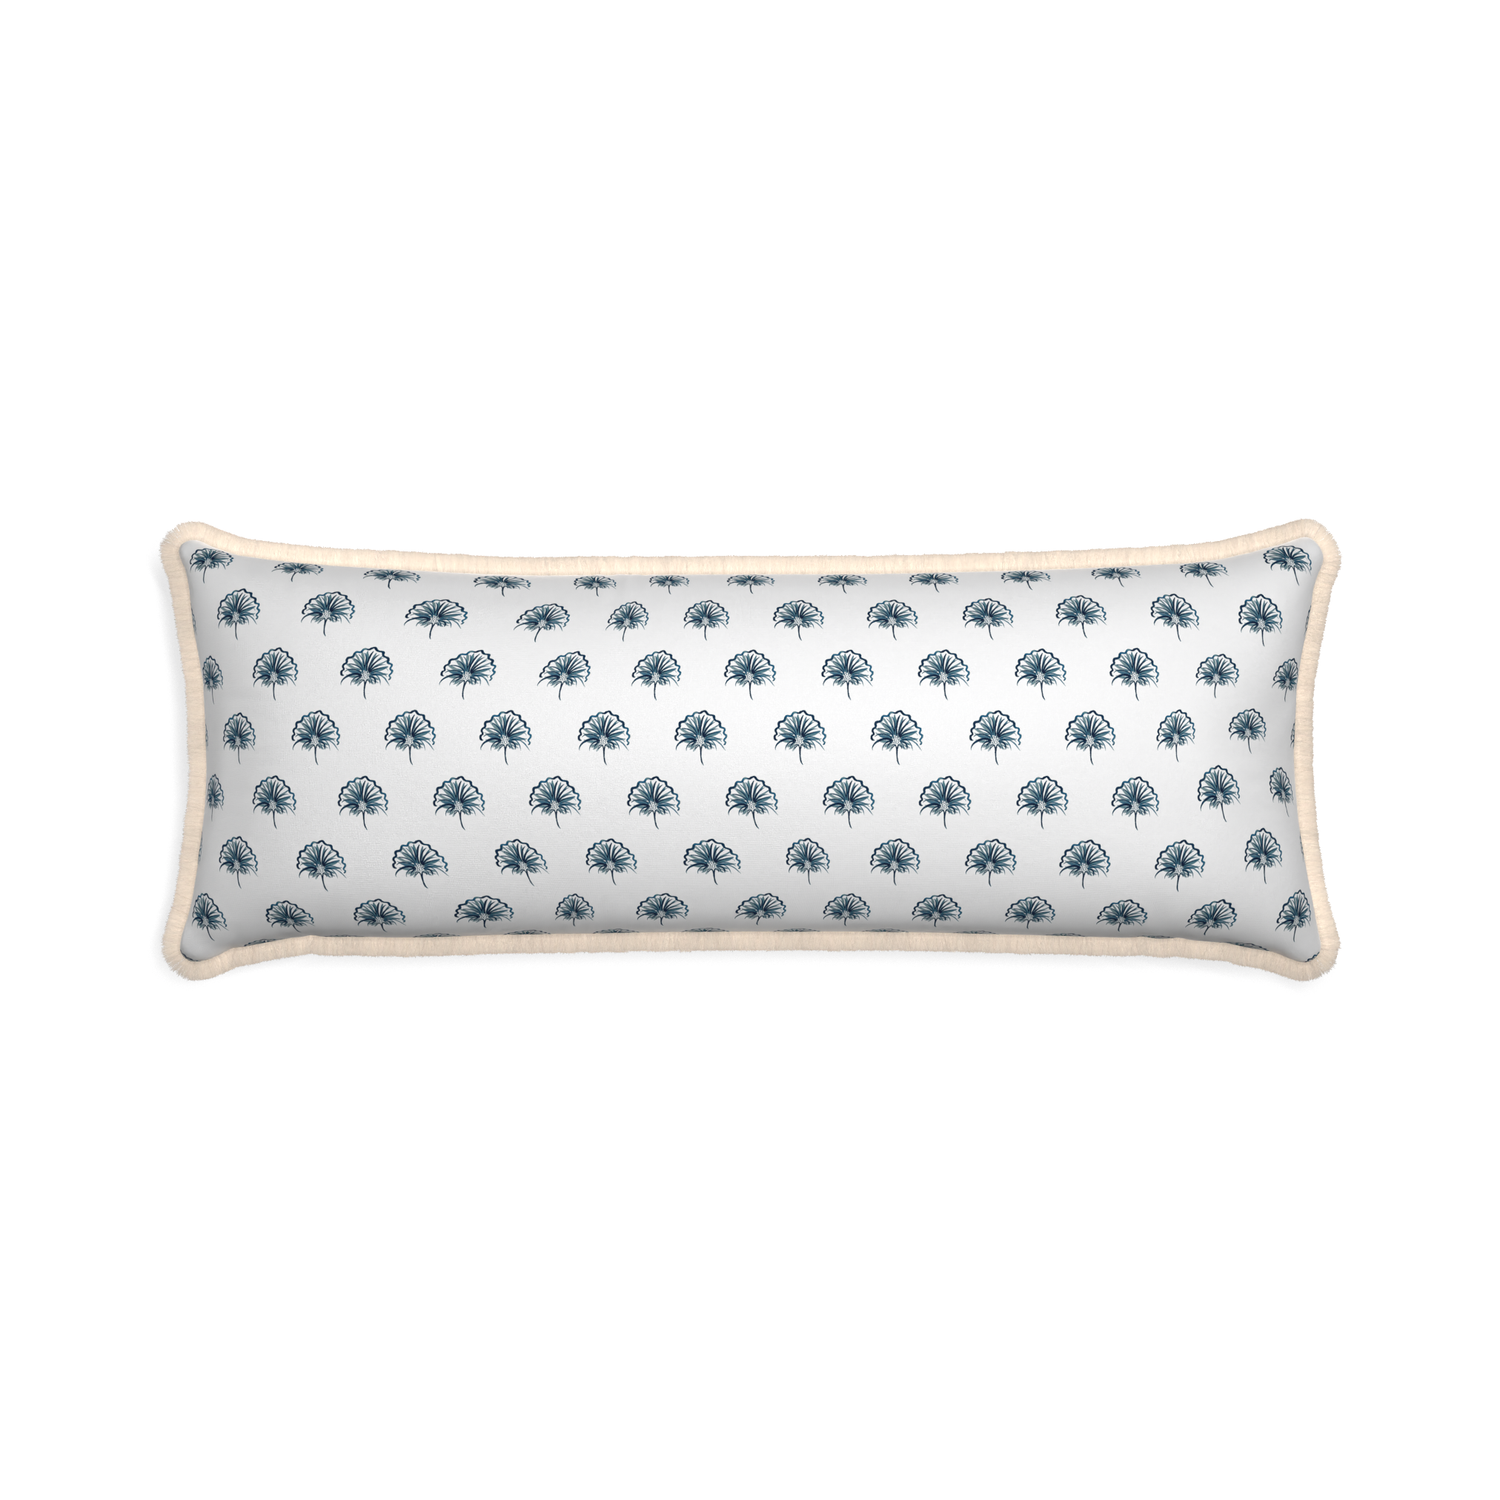 Xl-lumbar penelope midnight custom pillow with cream fringe on white background